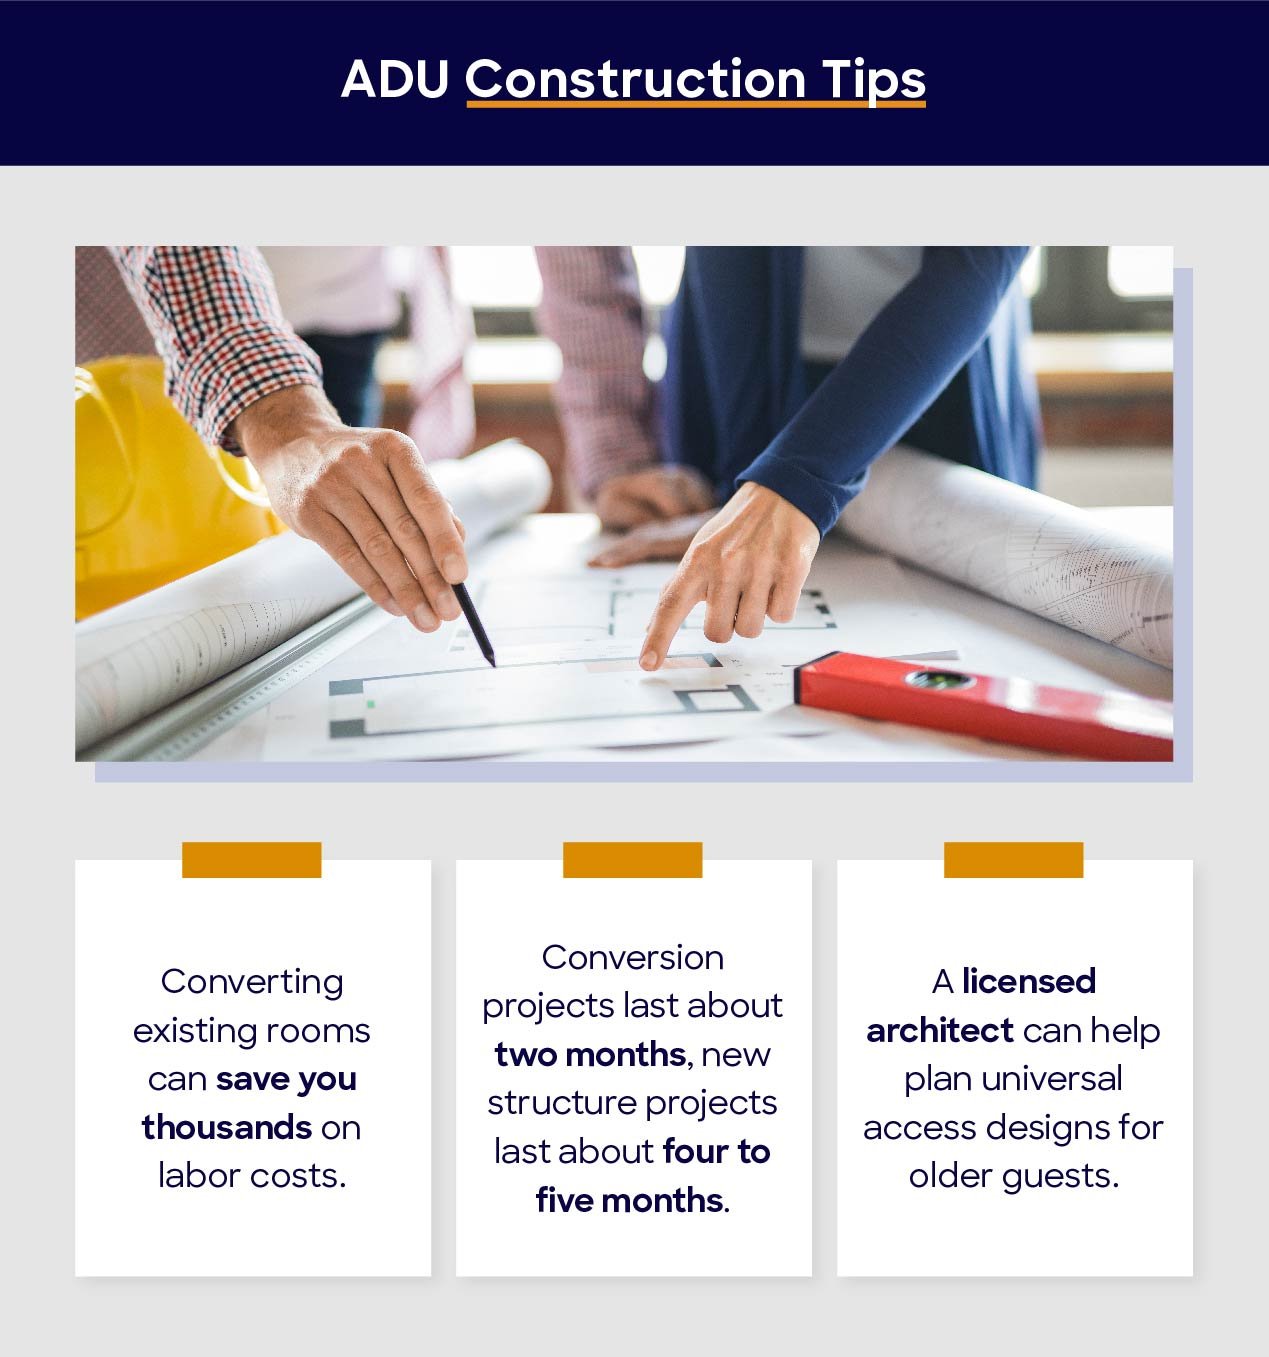 ADU construction tips